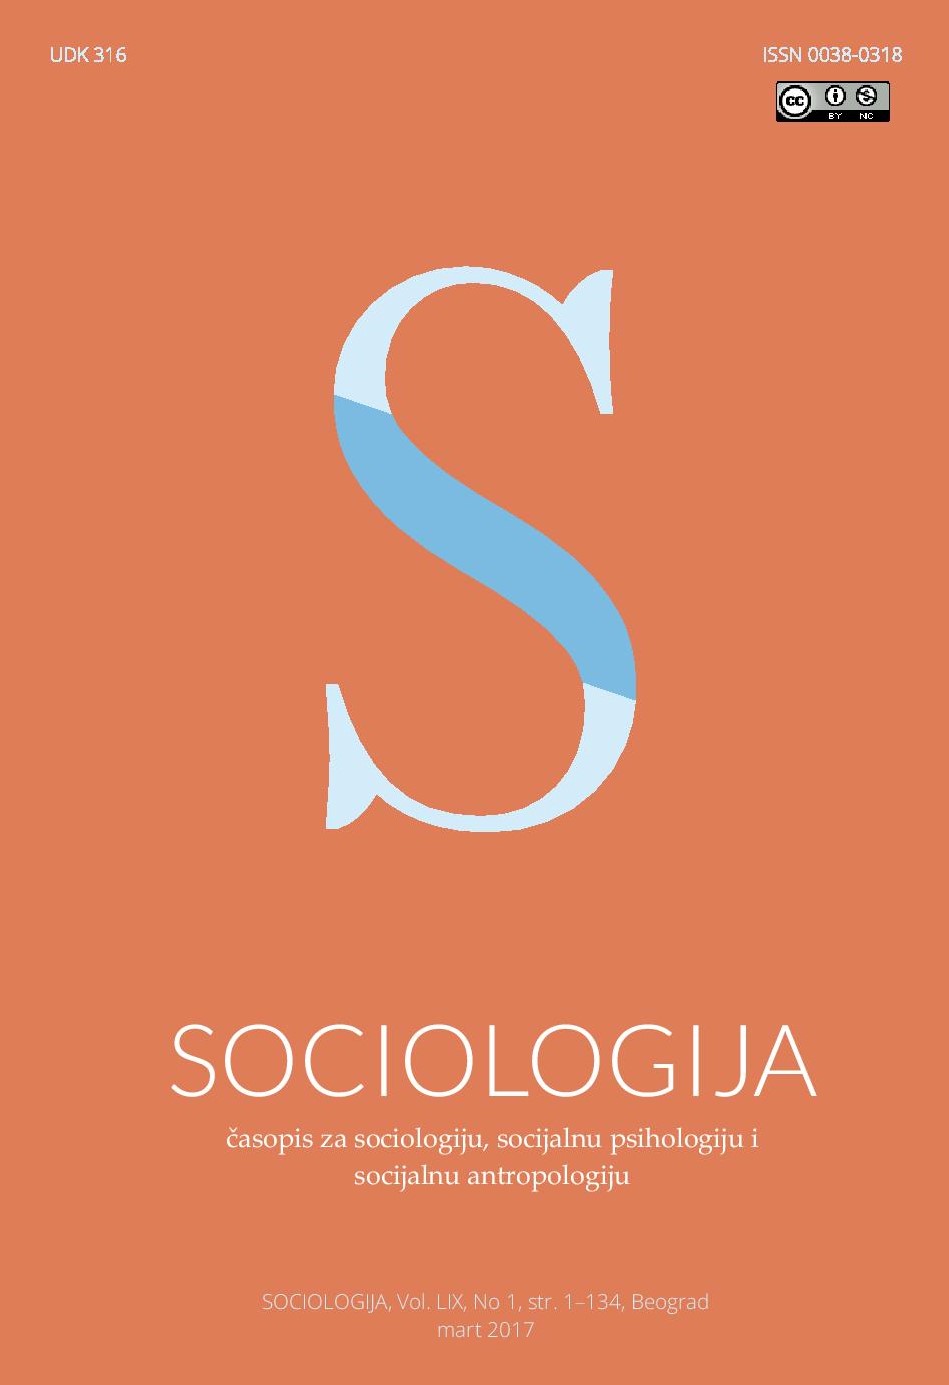 Profile of social entrepreneur in Serbia: Motivation and socio-demographic characteristics